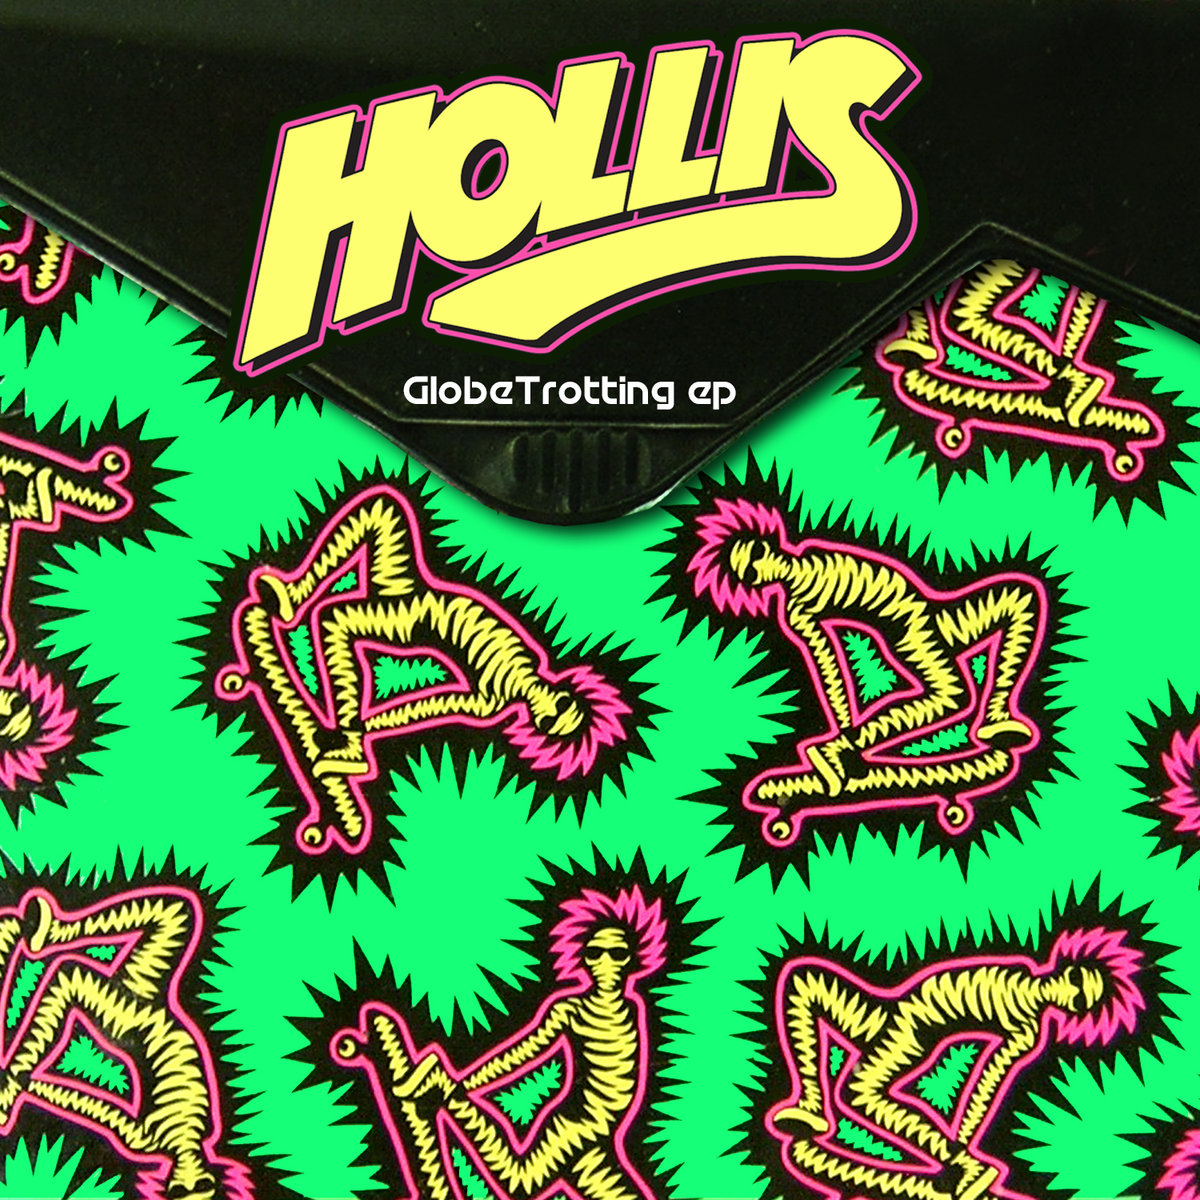 Hollis - Globetrotting